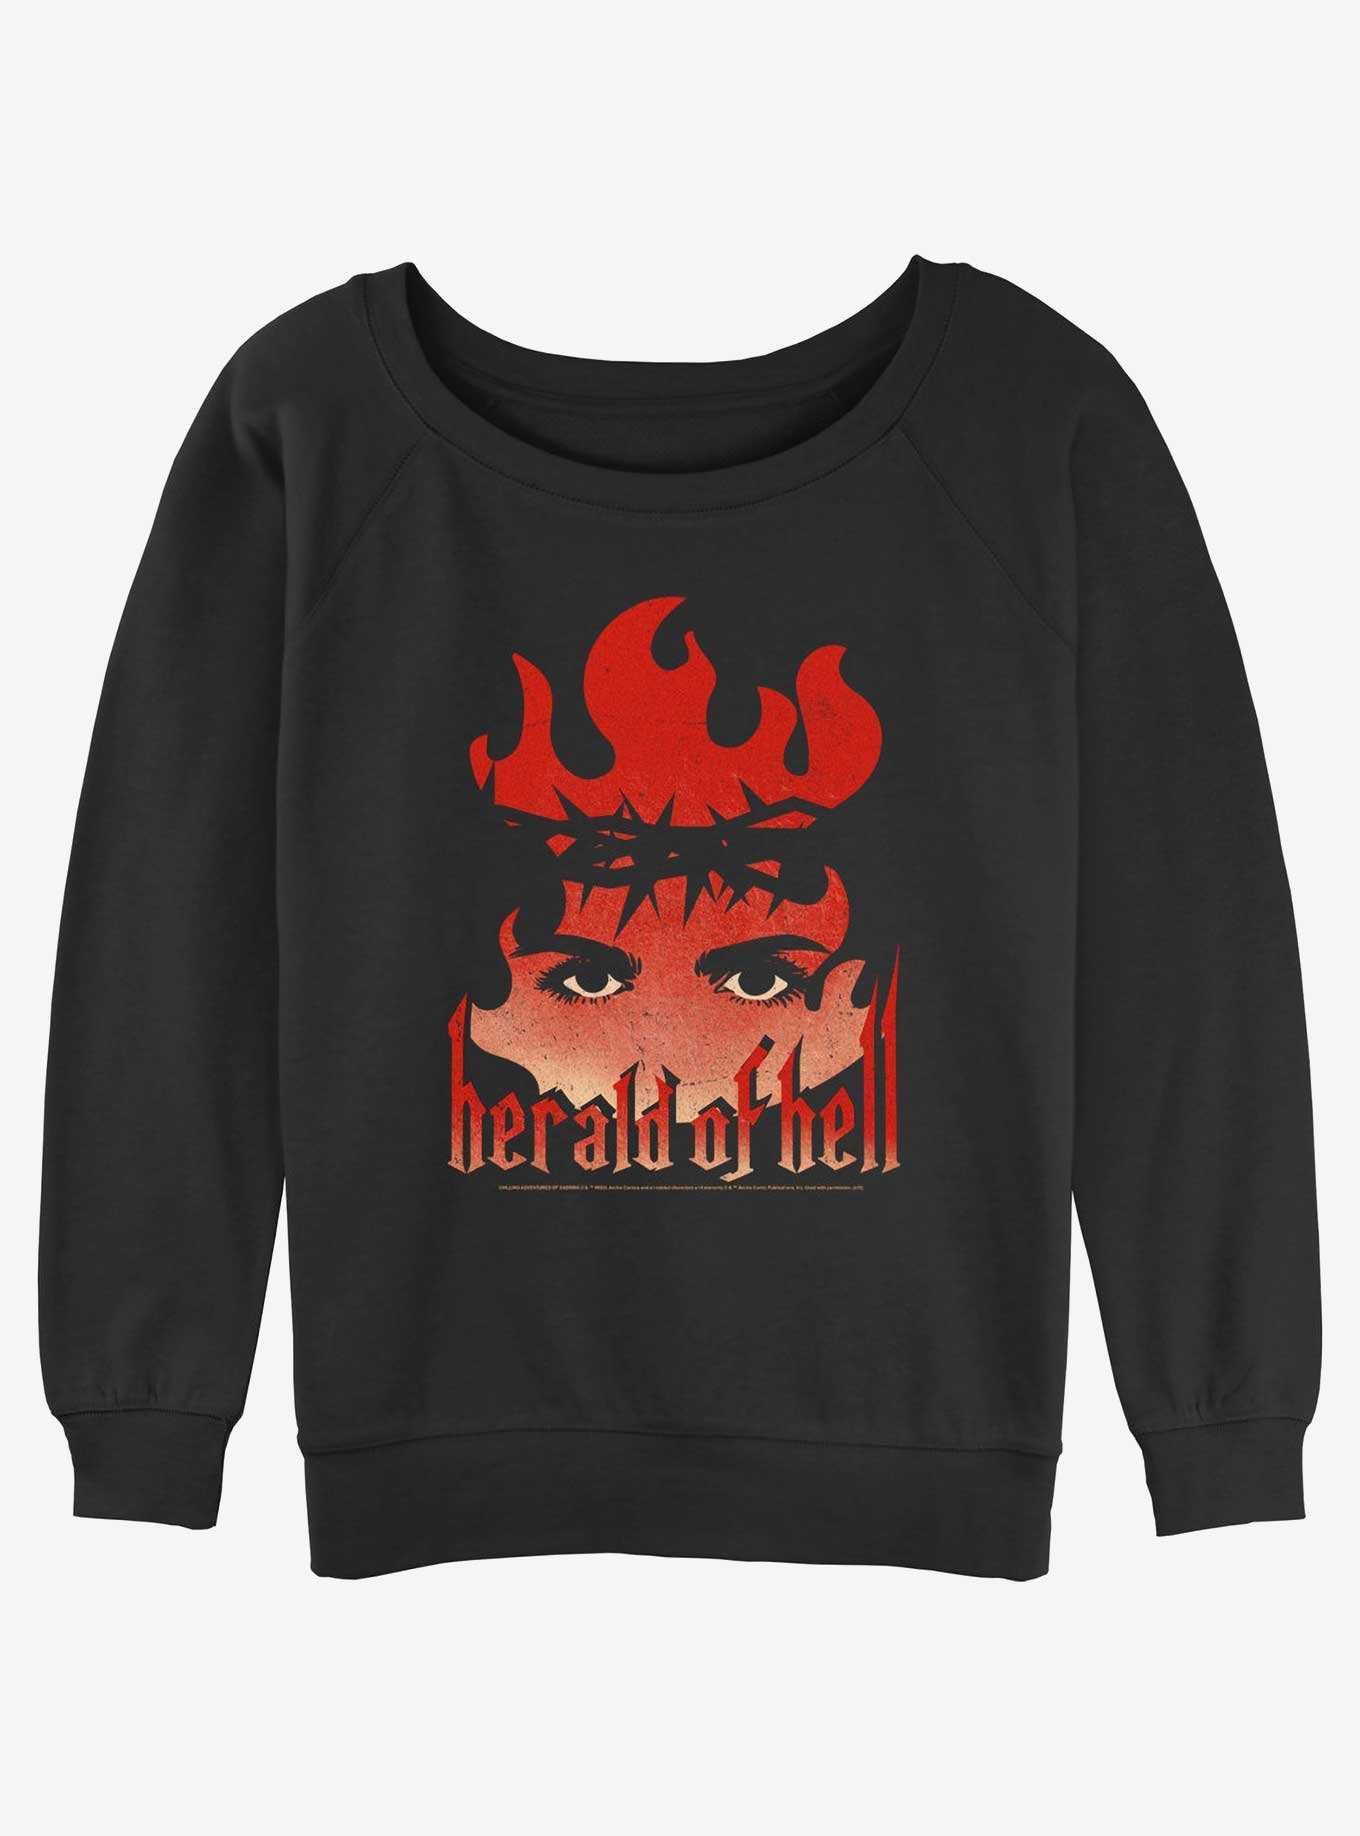 Chilling Adventures of Sabrina Herlad Of Hell Girls Slouchy Sweatshirt, , hi-res